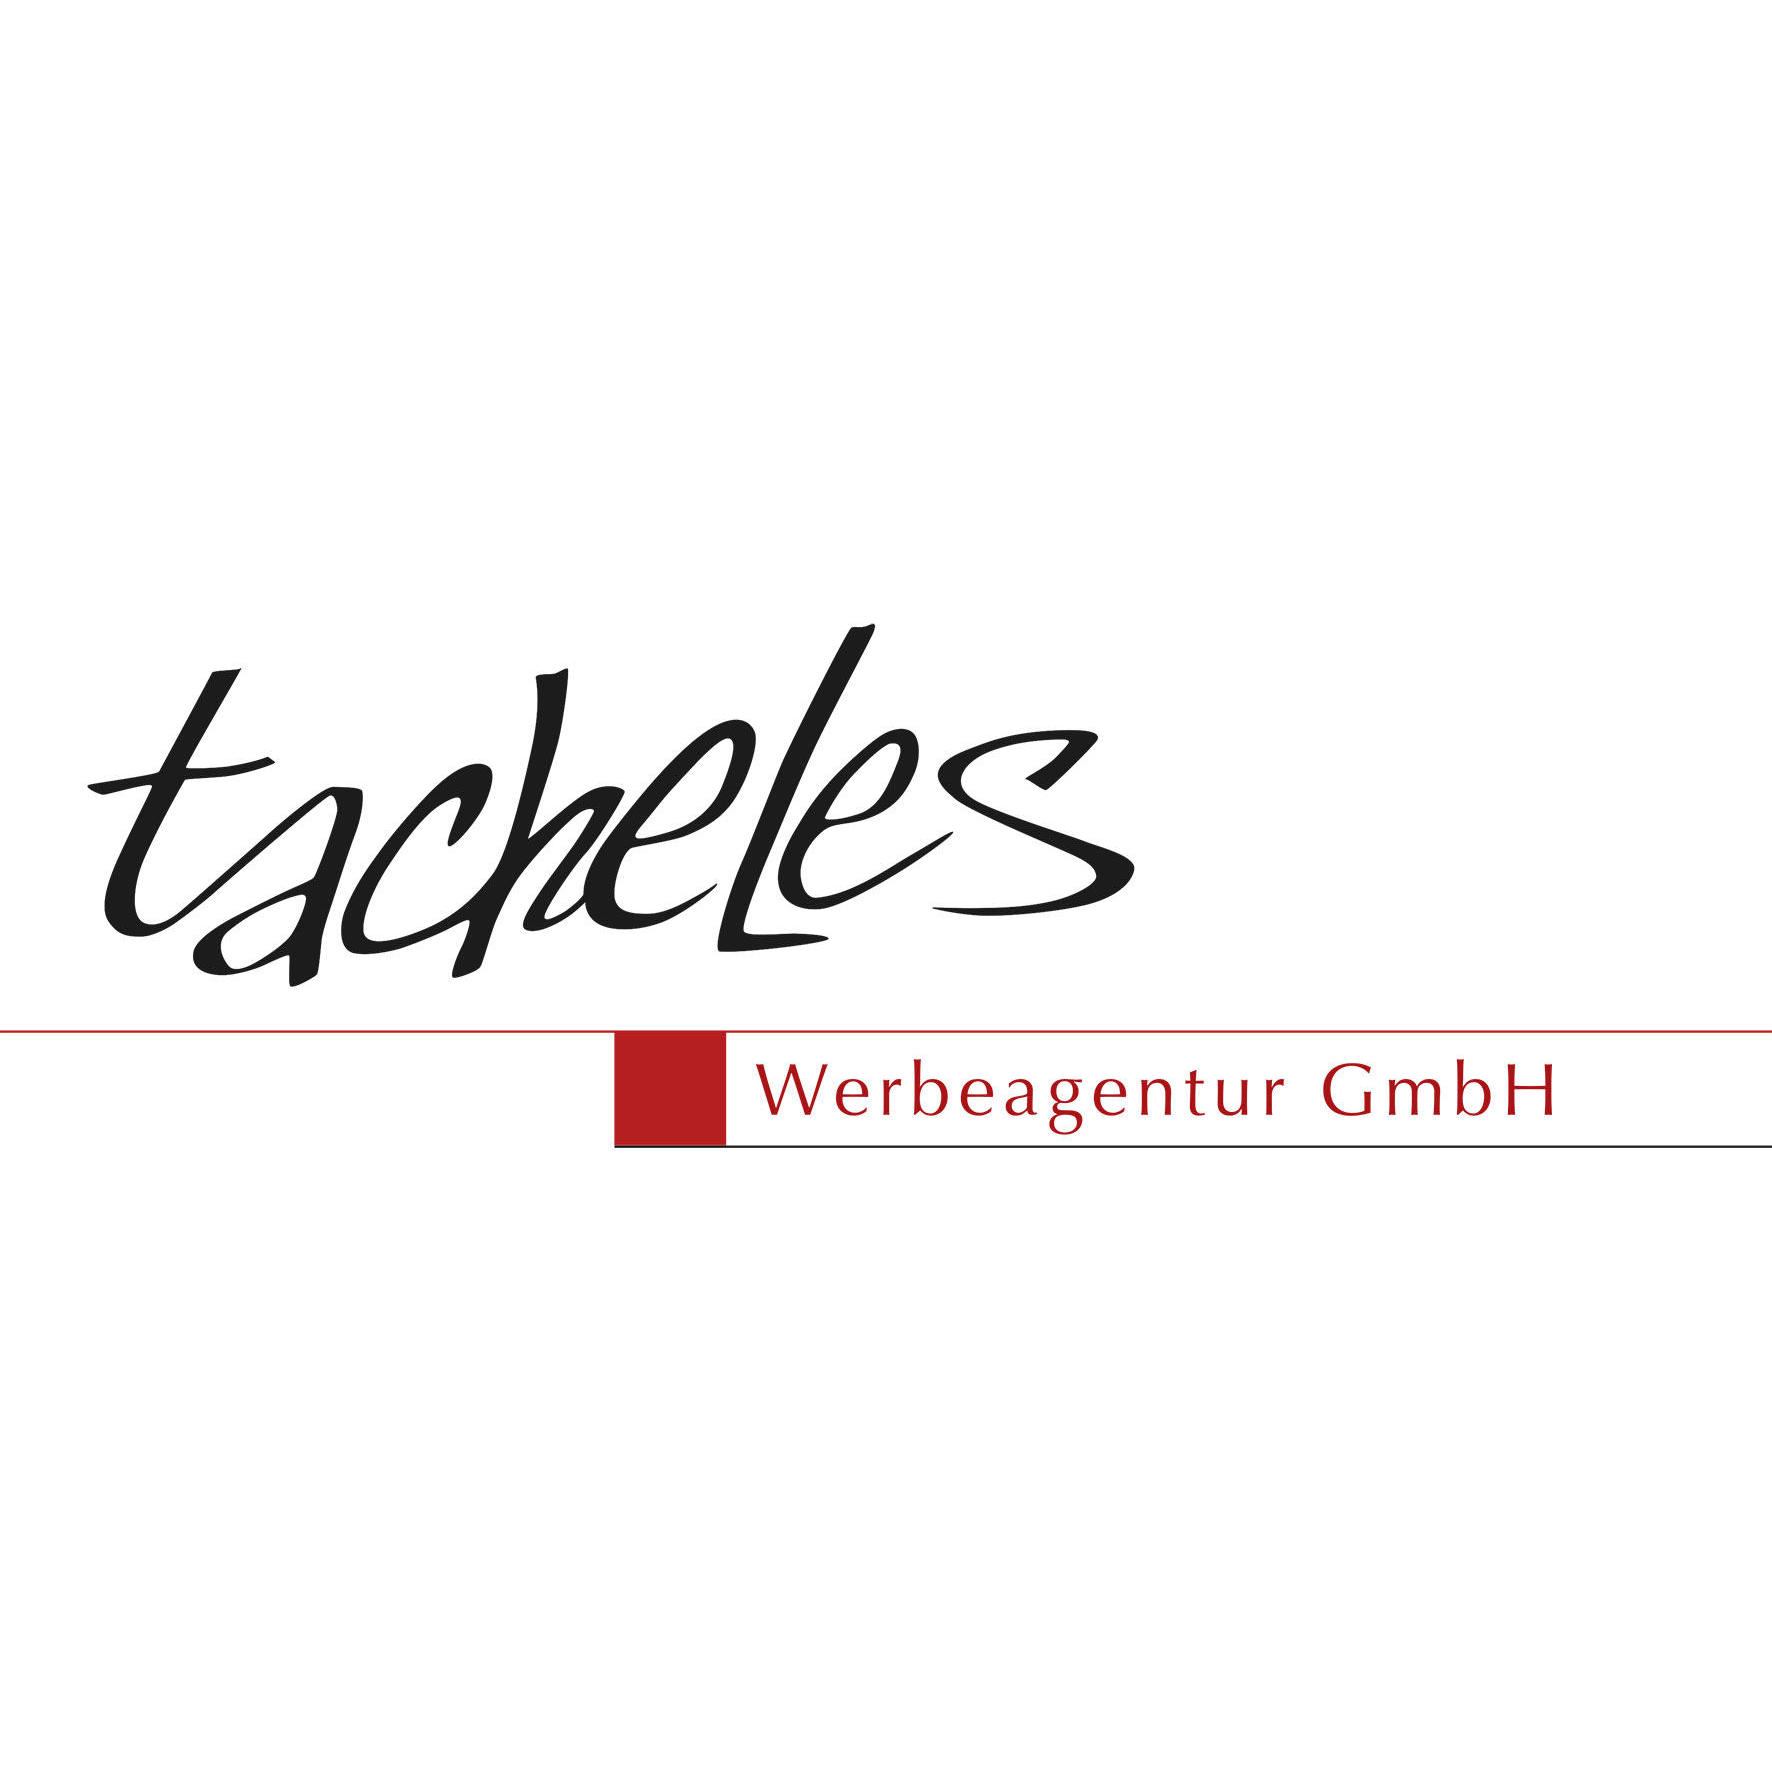 tacheles Werbeagentur GmbH  